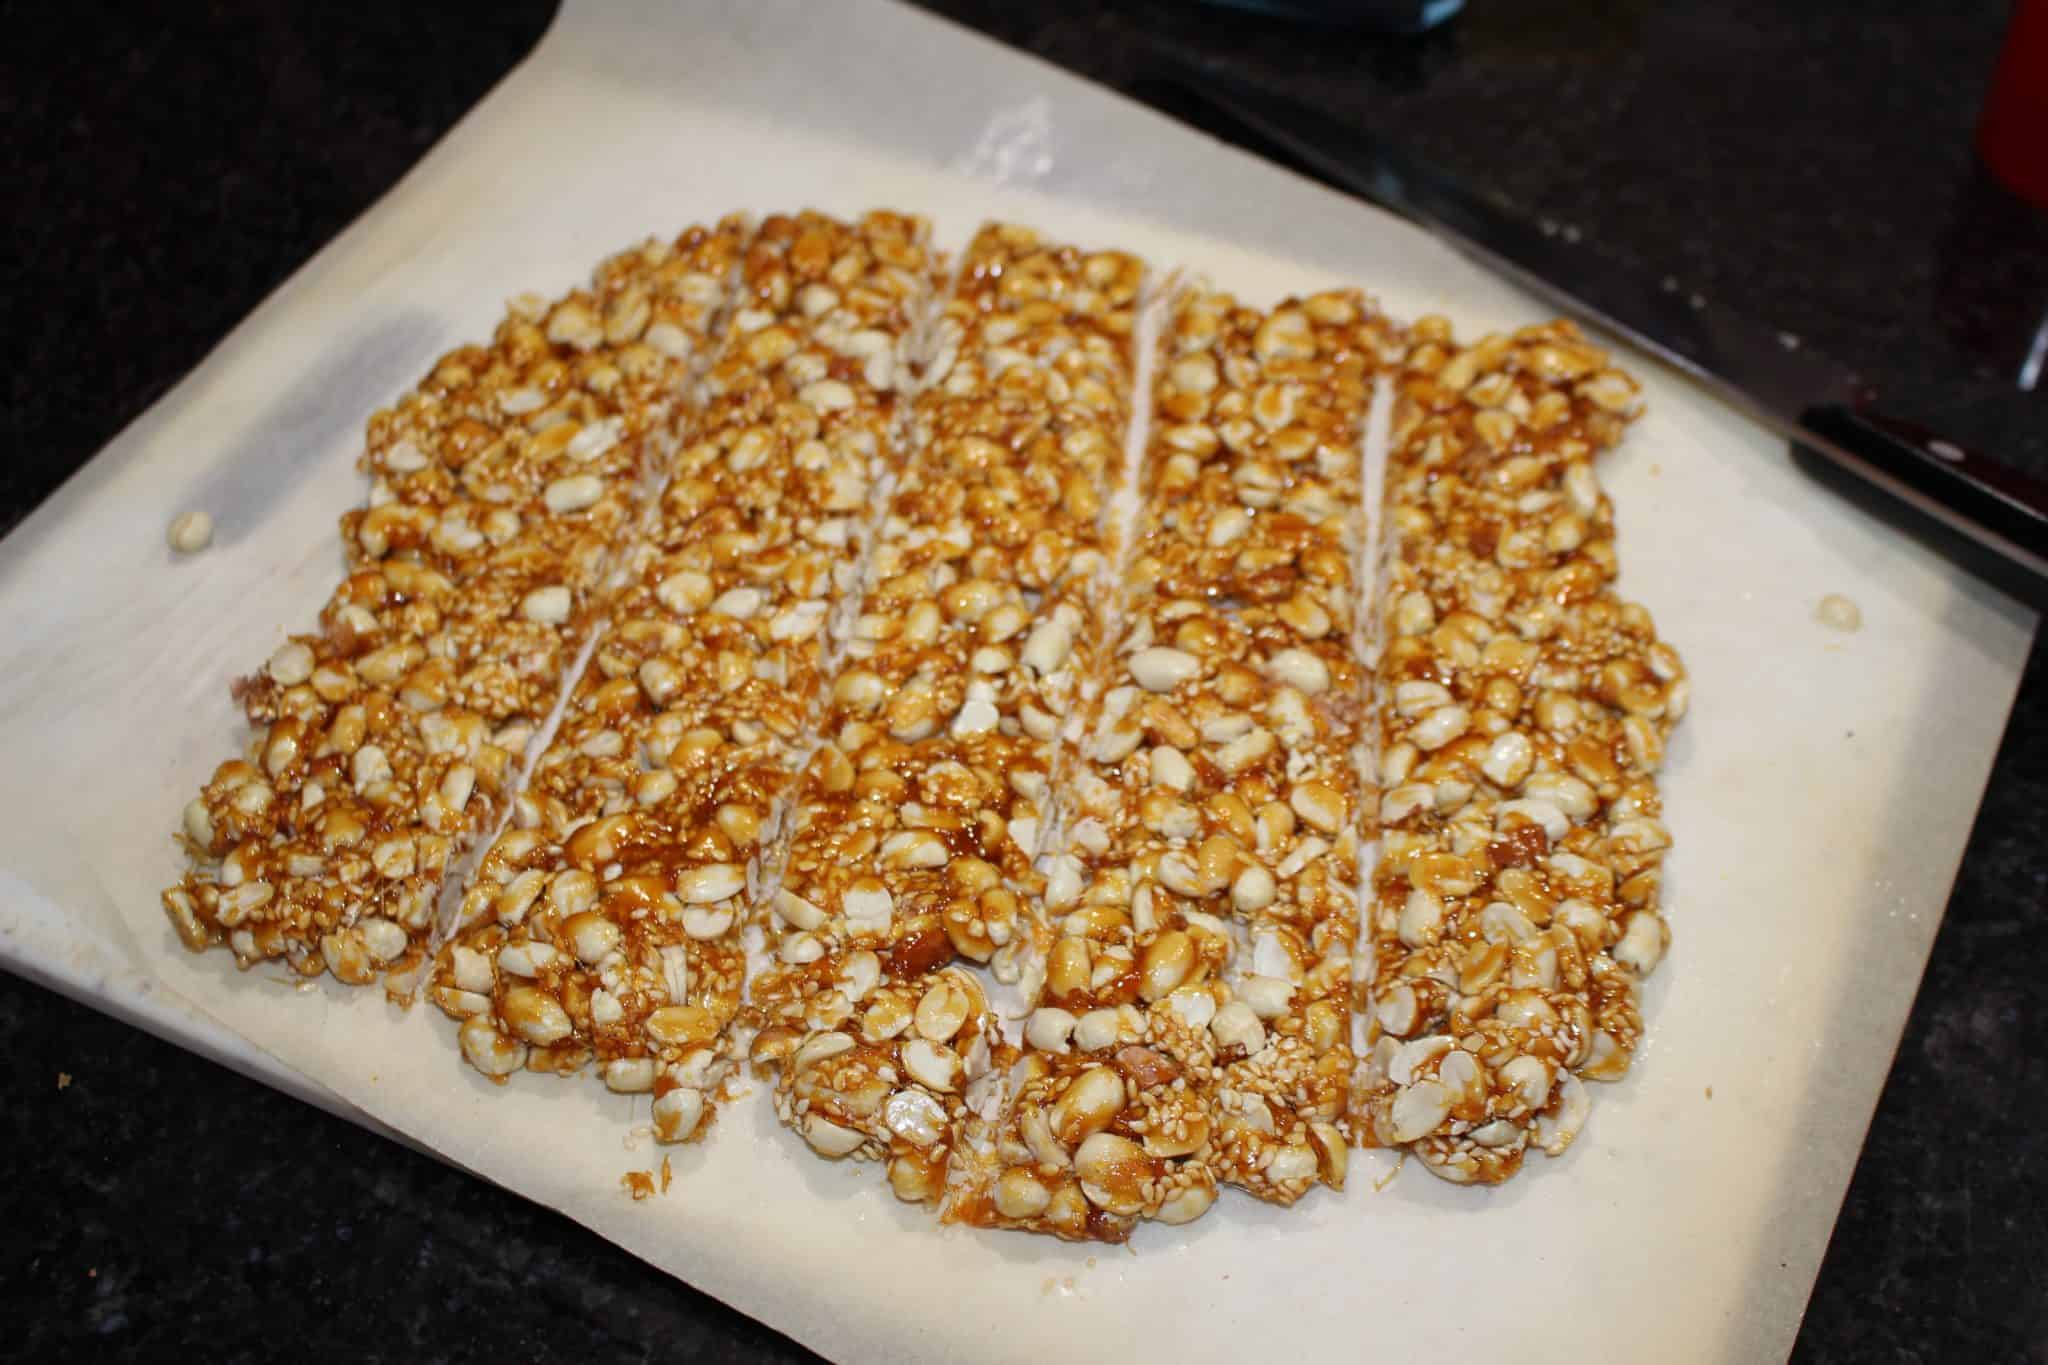 peanut sesame ginger brittle on a baking dish